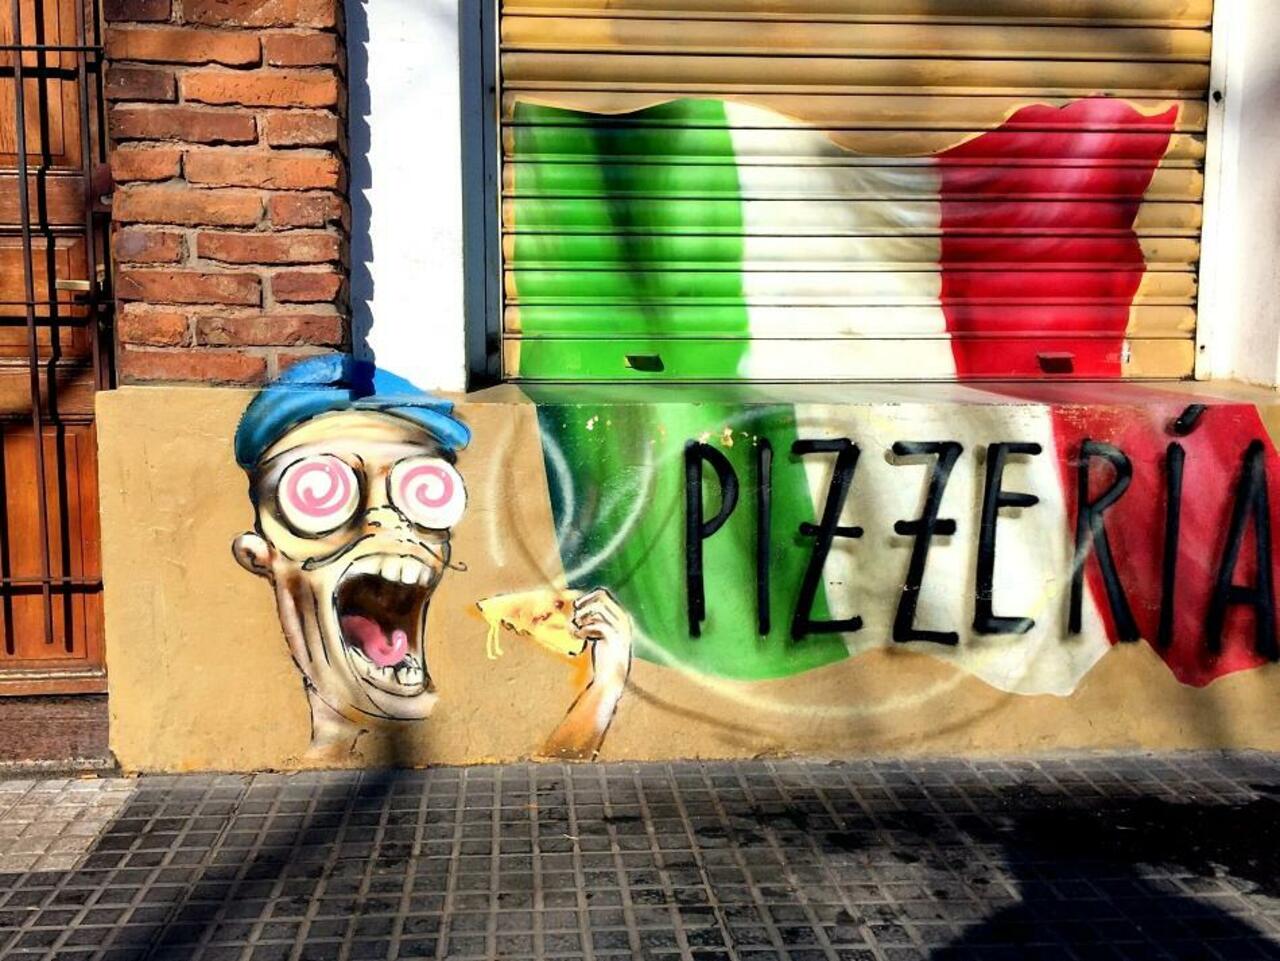 #Graffiti de hoy: << Especial de muzzarella... >> calles 9y66 #LaPlata #Argentina #StreetArt #UrbanArt #ArteUrbano http://t.co/4xtPrFEoa6